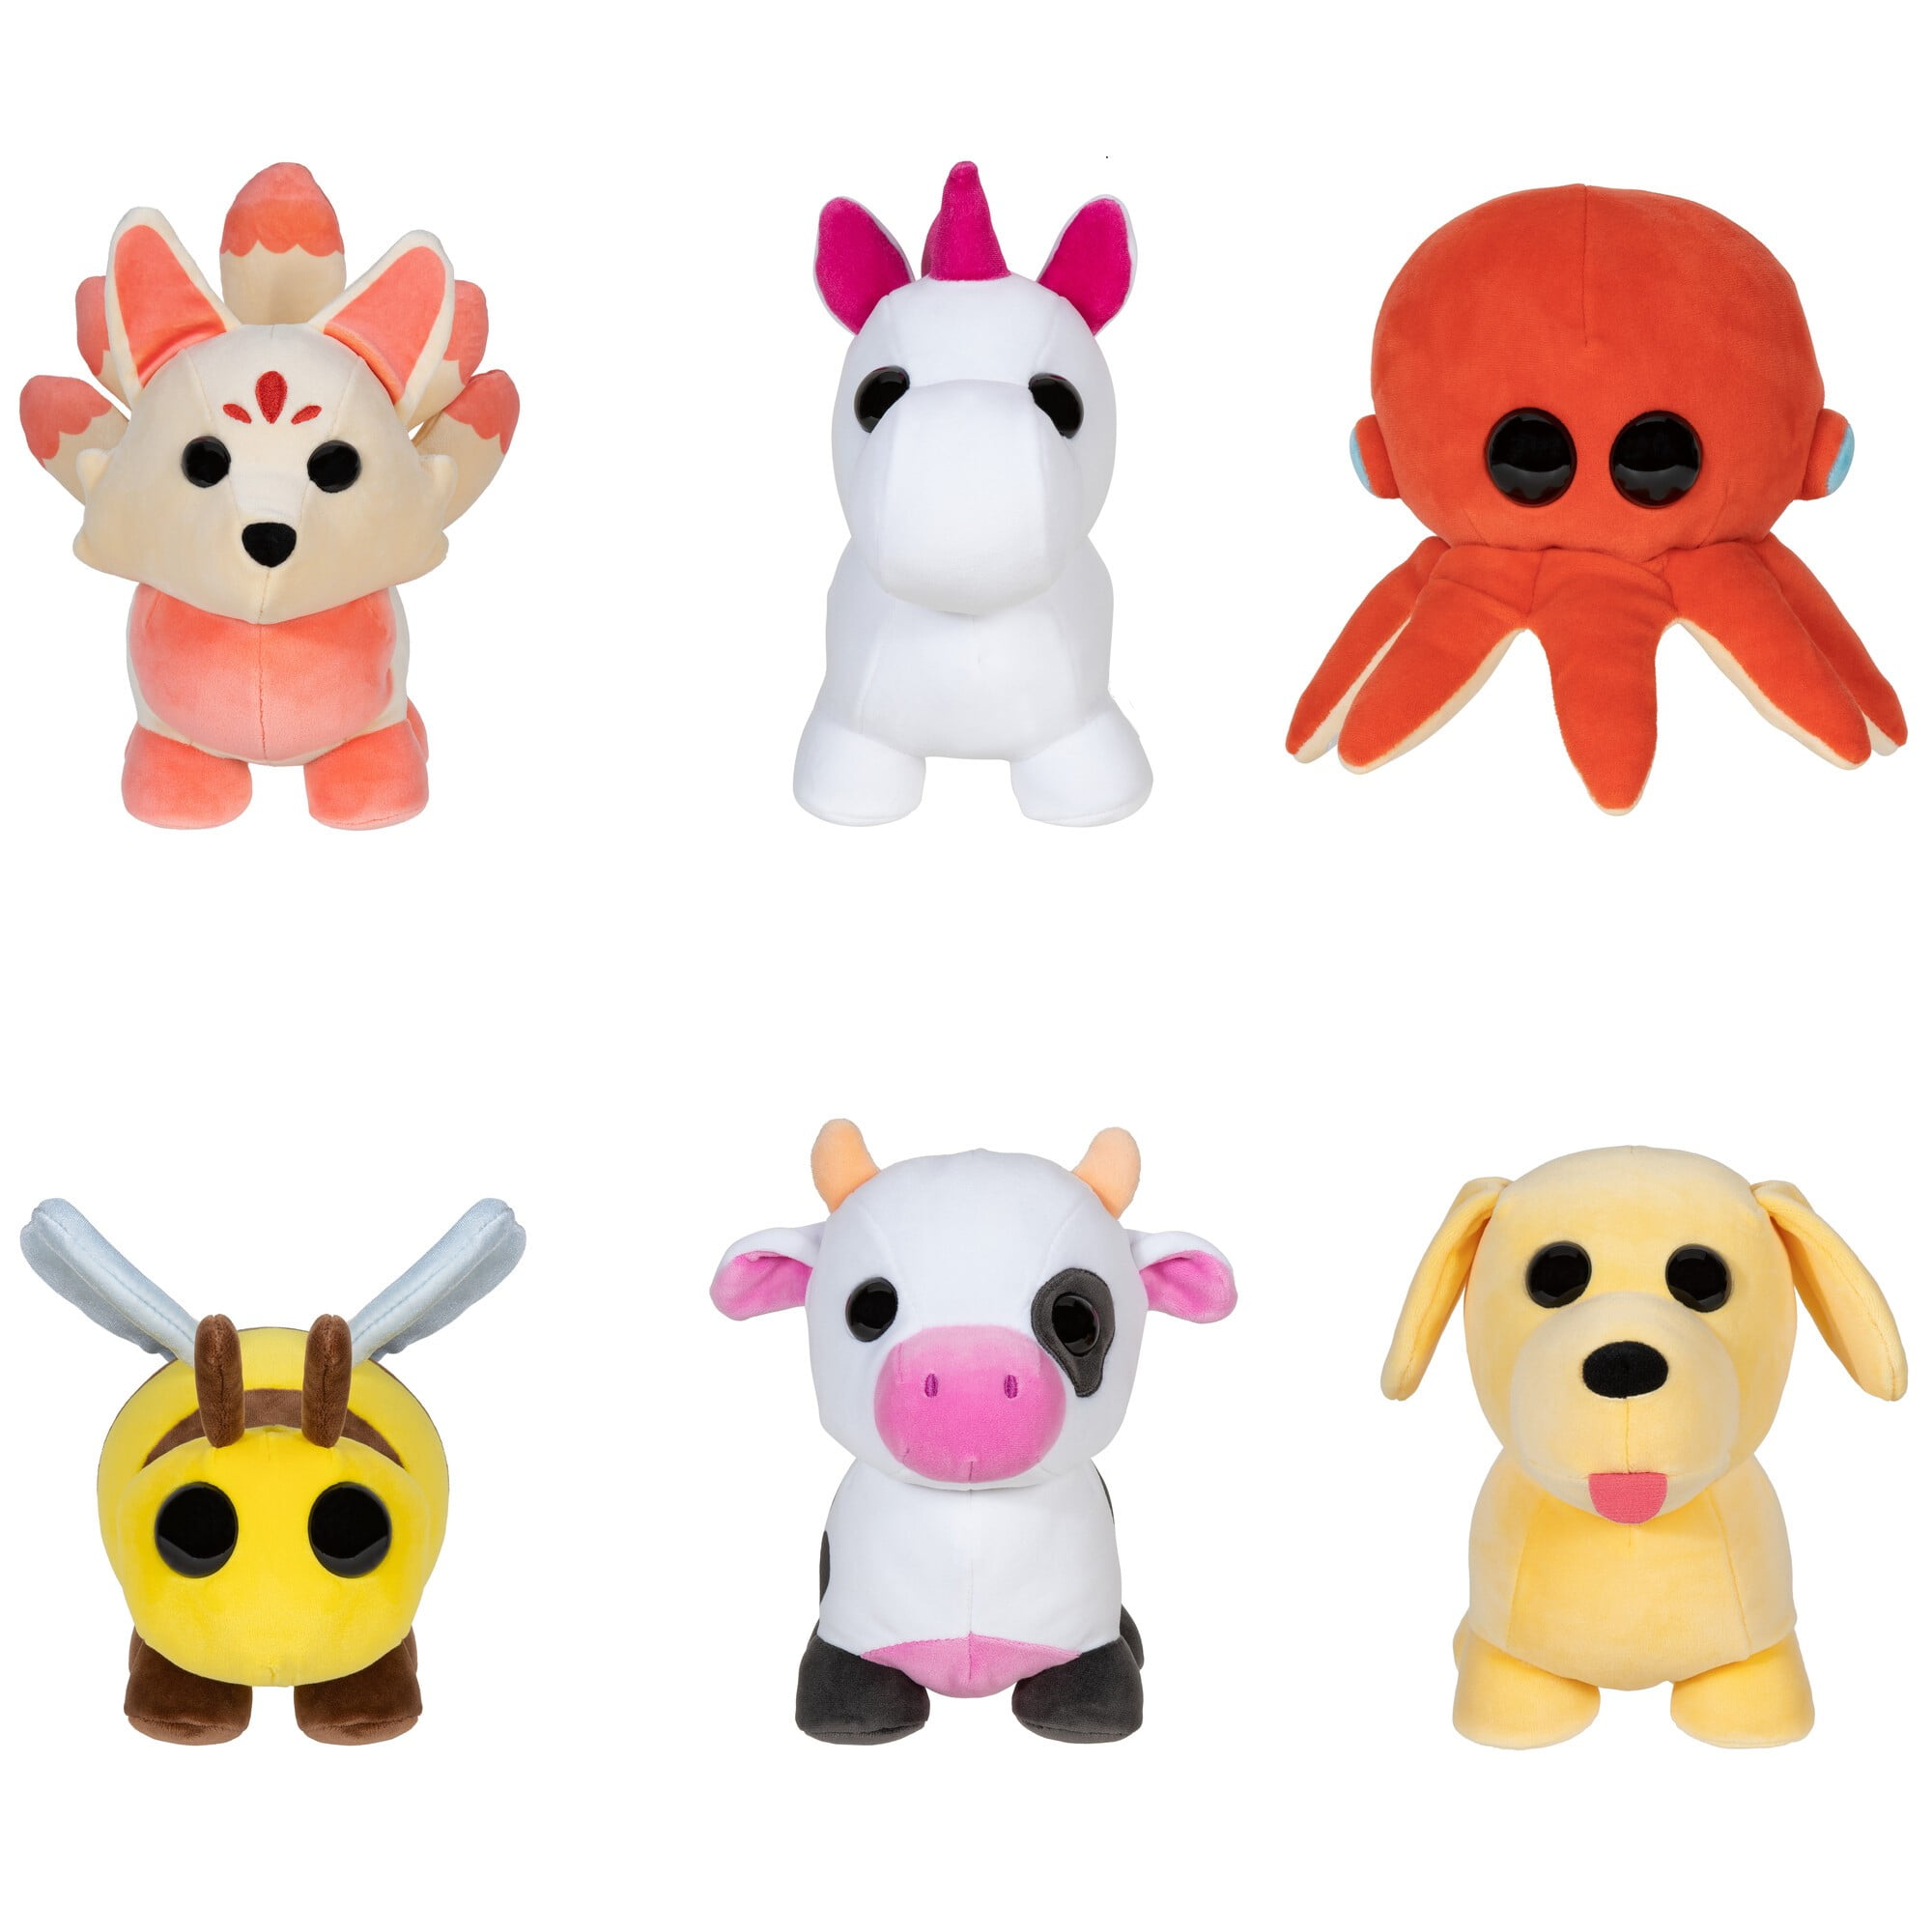 Adopt Me! 8 Collector Plush Pet Octopus, Stuffed Animal Plush Toy